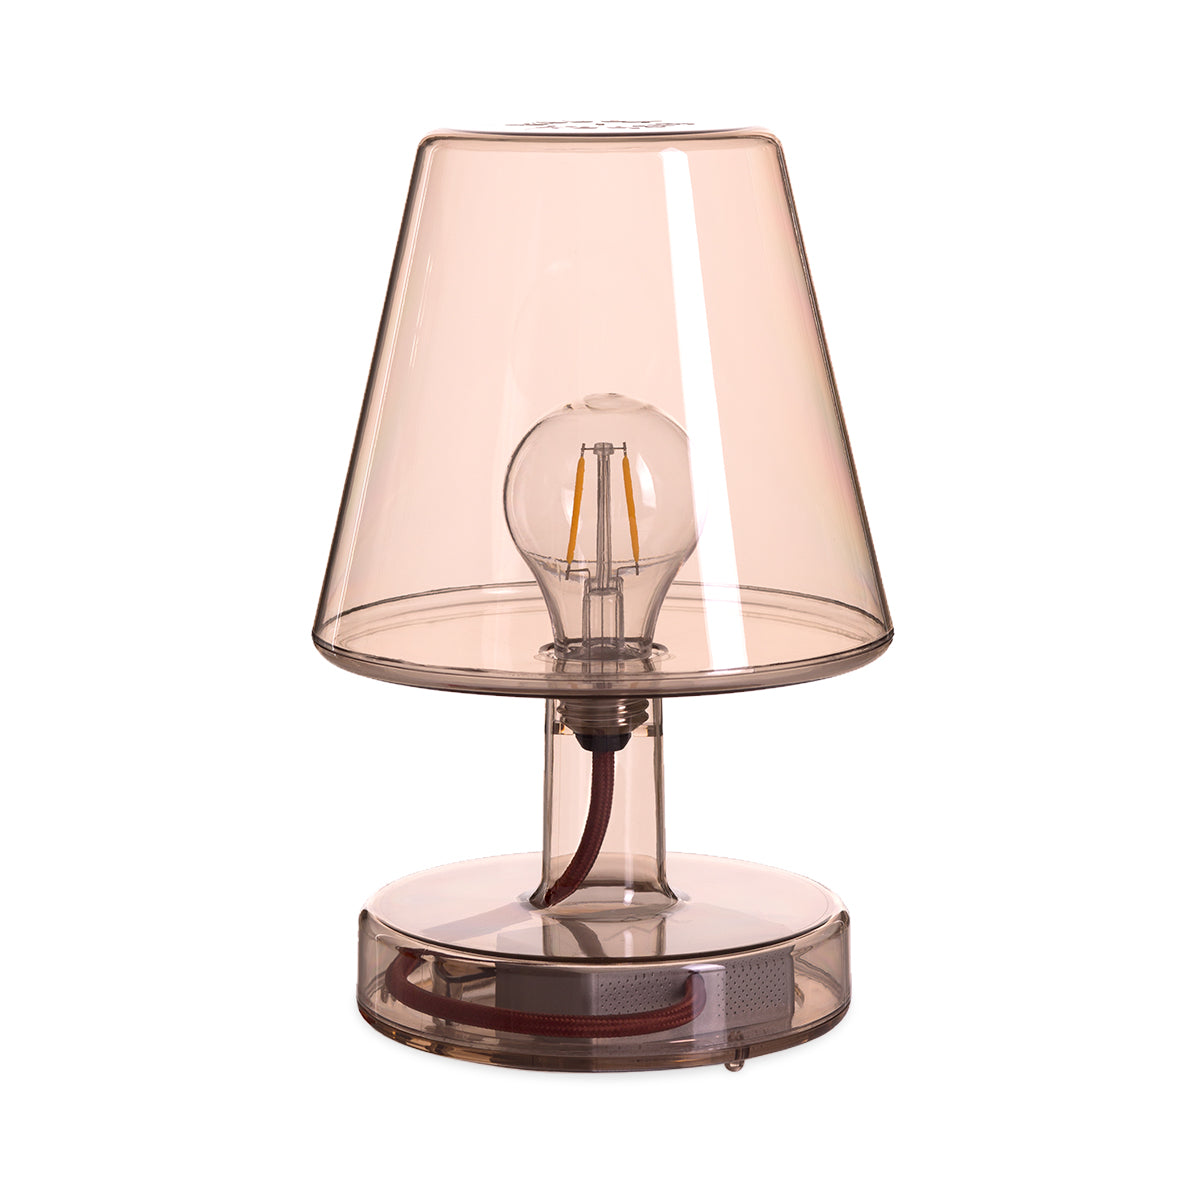 Transloetje Brown table lamp